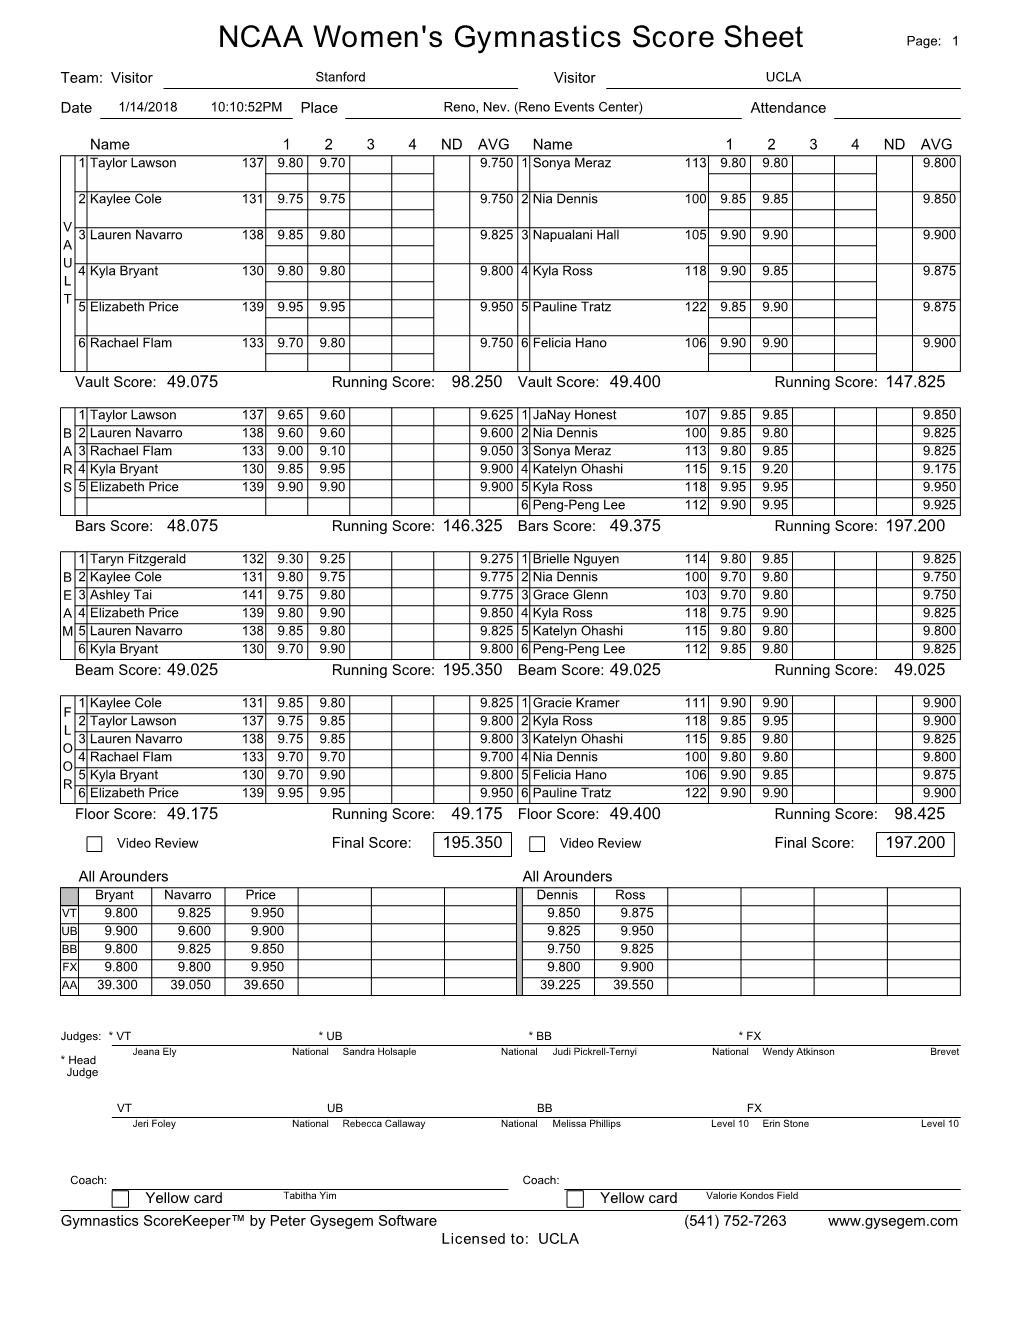 Women's Score Sheet 01-14-2018